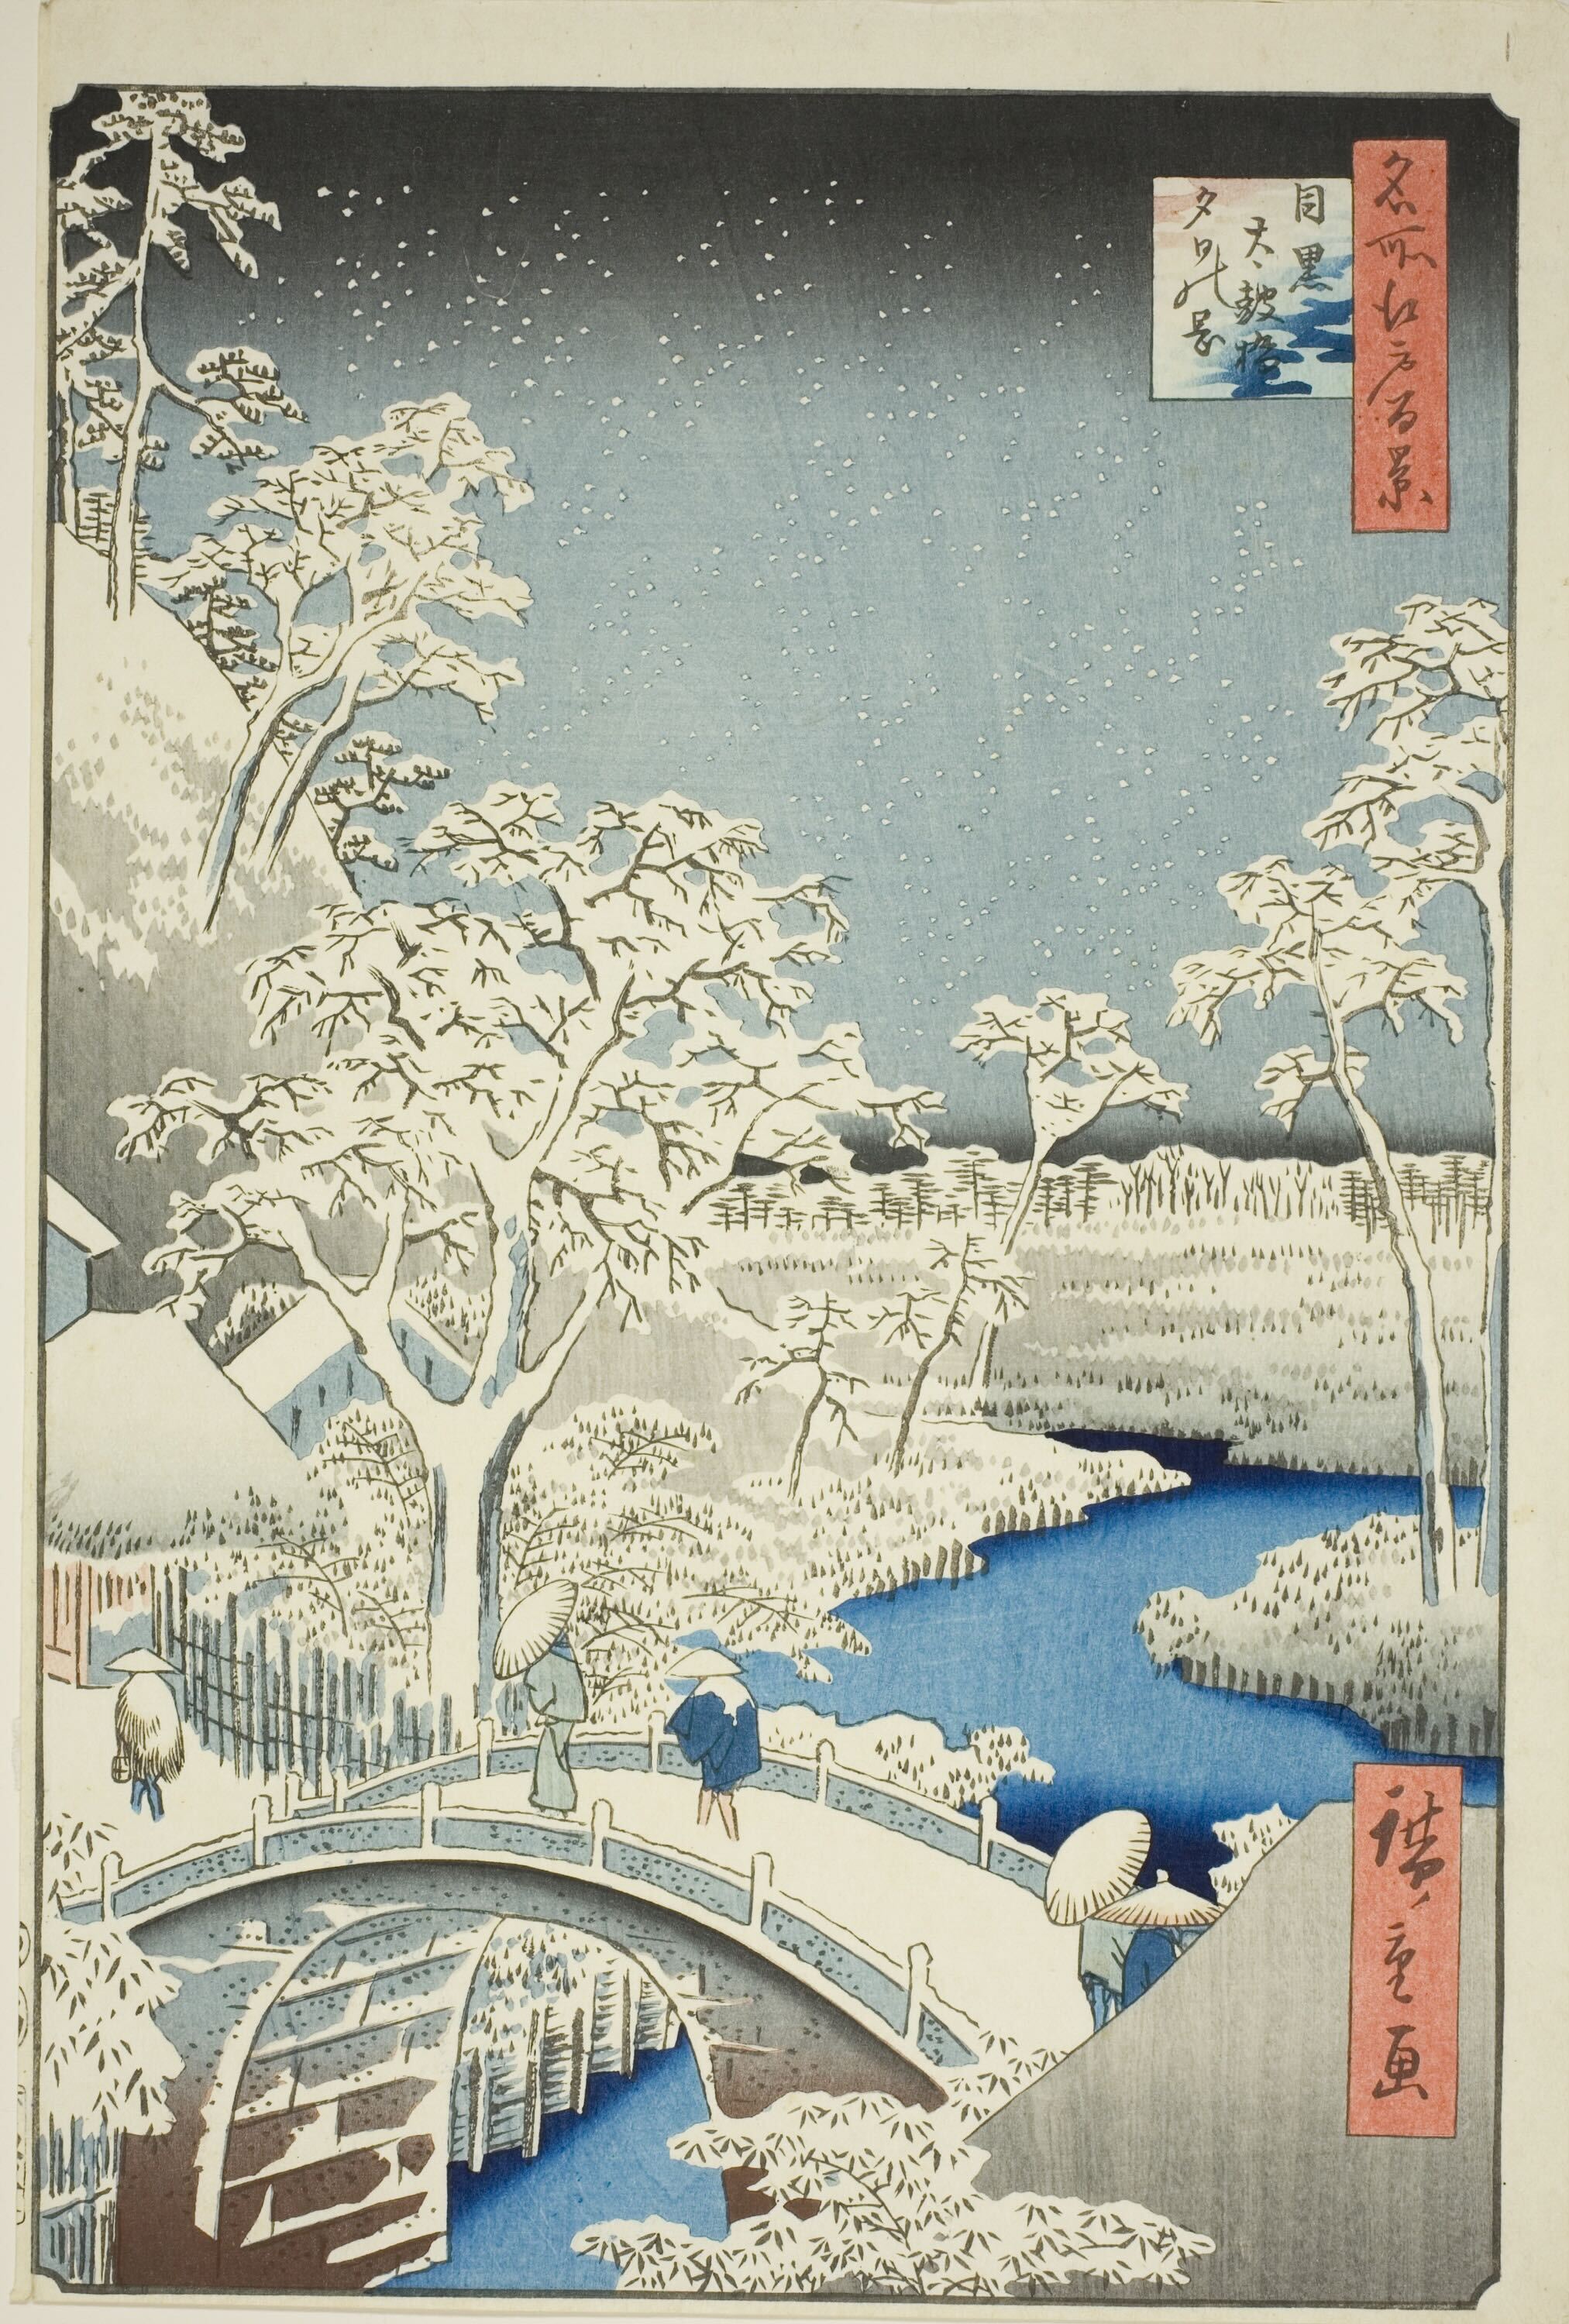 Karlı Bir Akşamda Taiko Köprüsü, Meguro (orig. "Taiko Bridge, Meguro, on a Snowy Evening") by  Hiroshige - 1857 - 36,2 x 23,5 cm Art Institute of Chicago